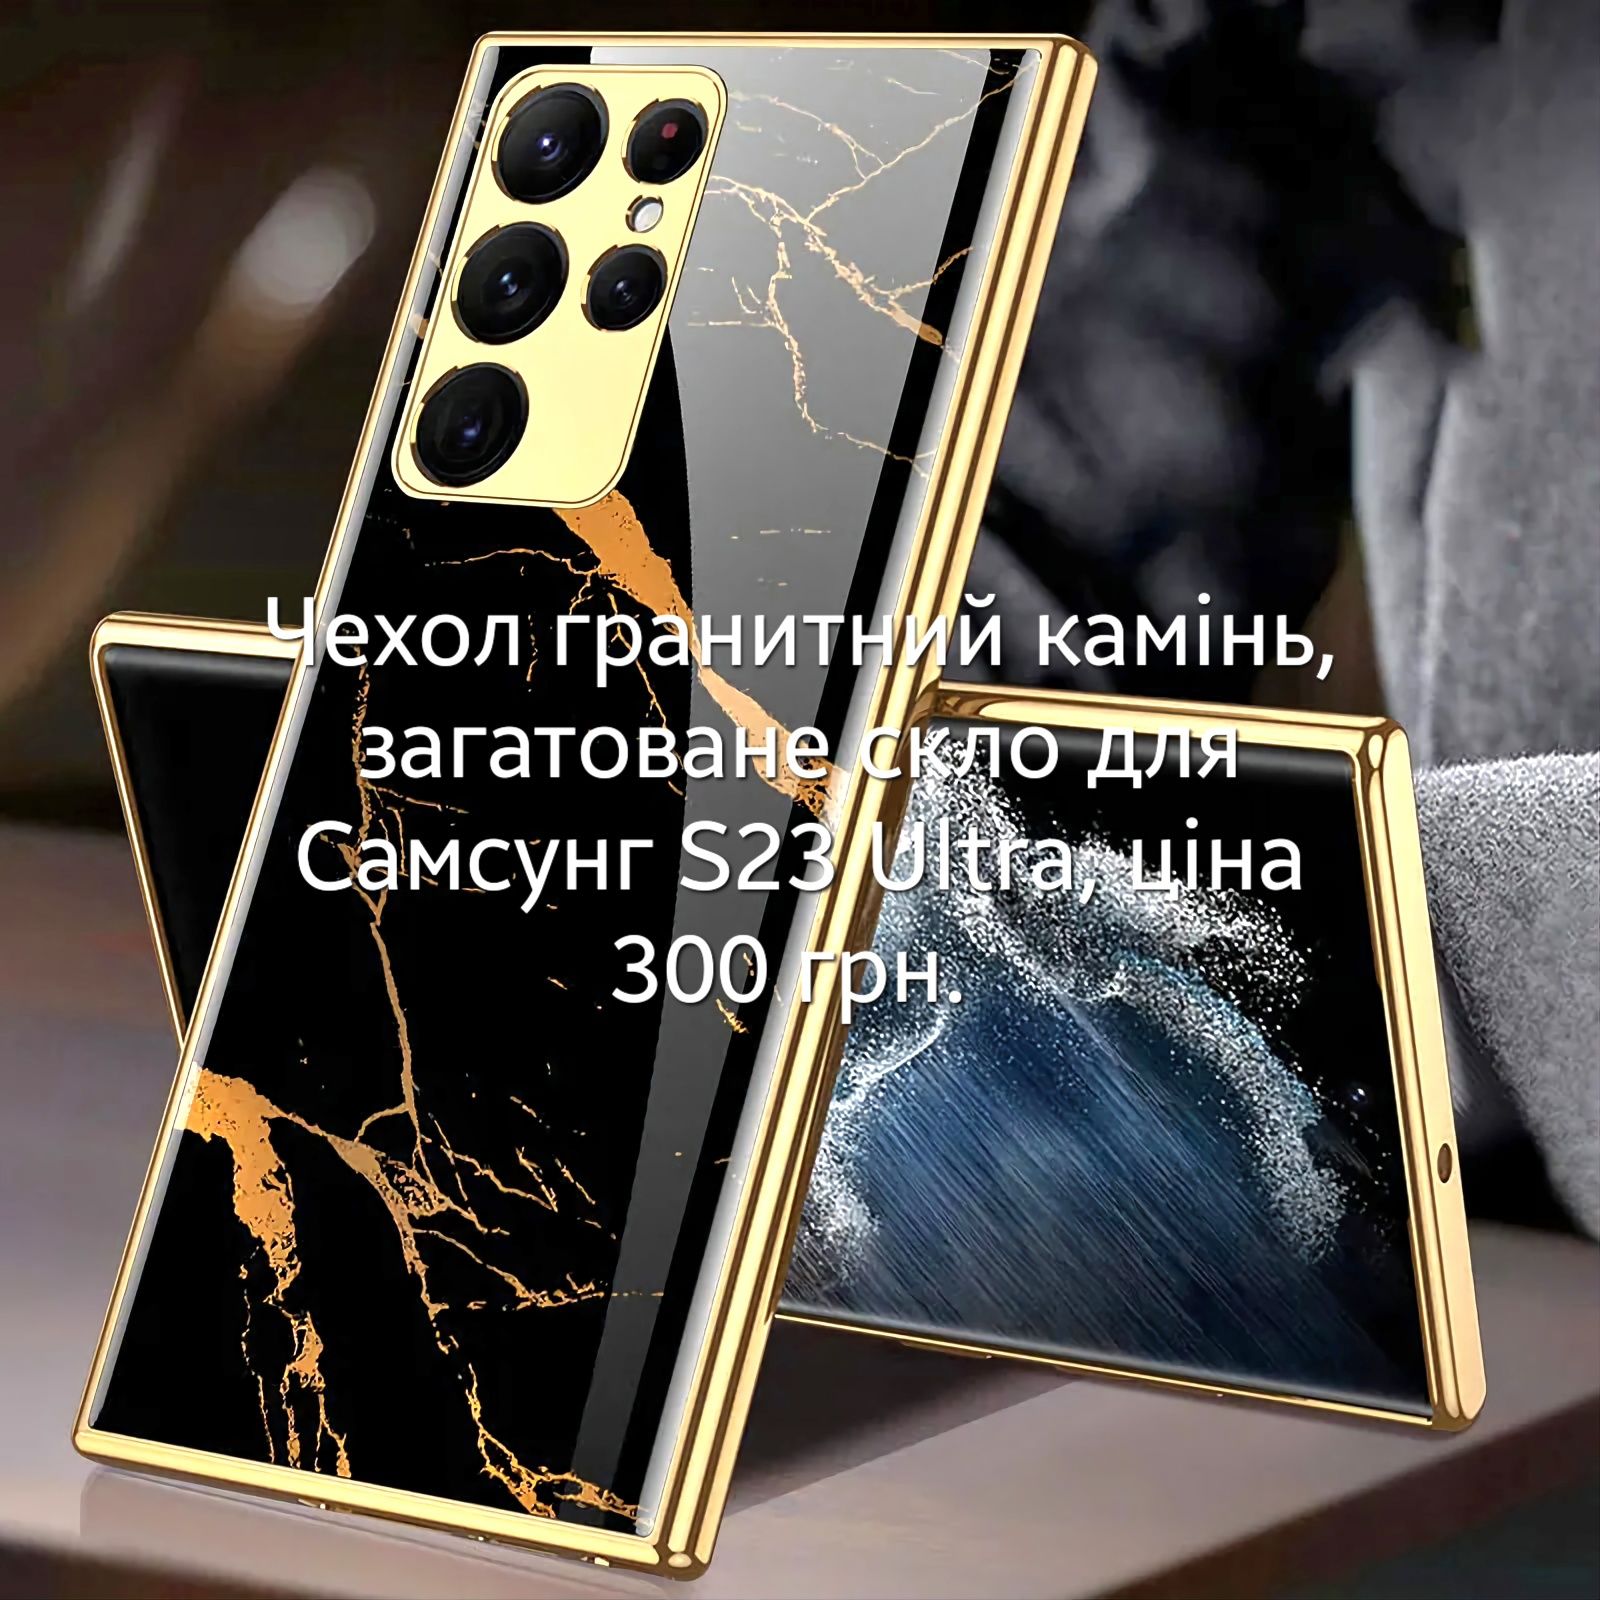 Samsung Galaxy Note 8, S8 Чехол, S22 ultra, S23ultra, резиновый, тверд